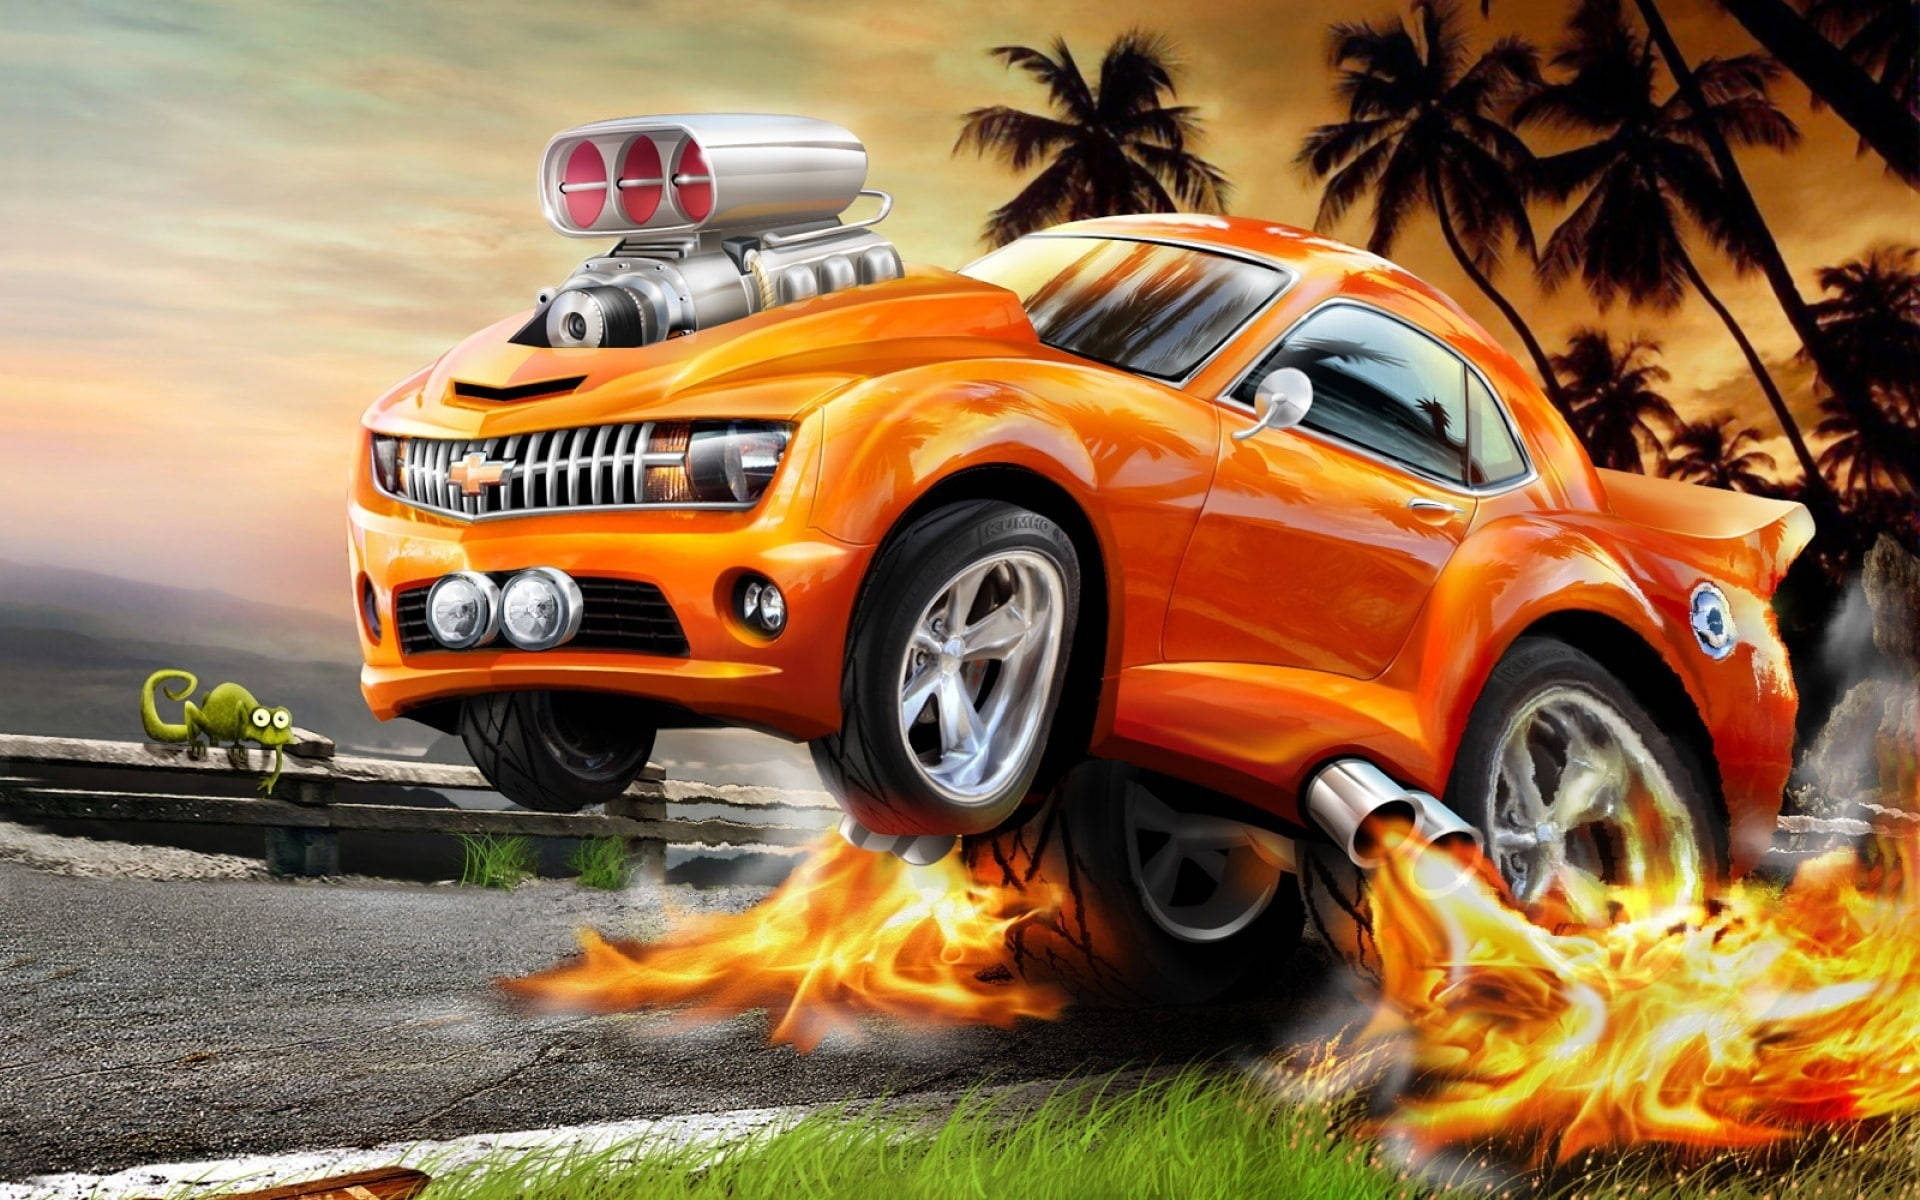 Cartoon Orange Fire Car Bursting Flames On Road